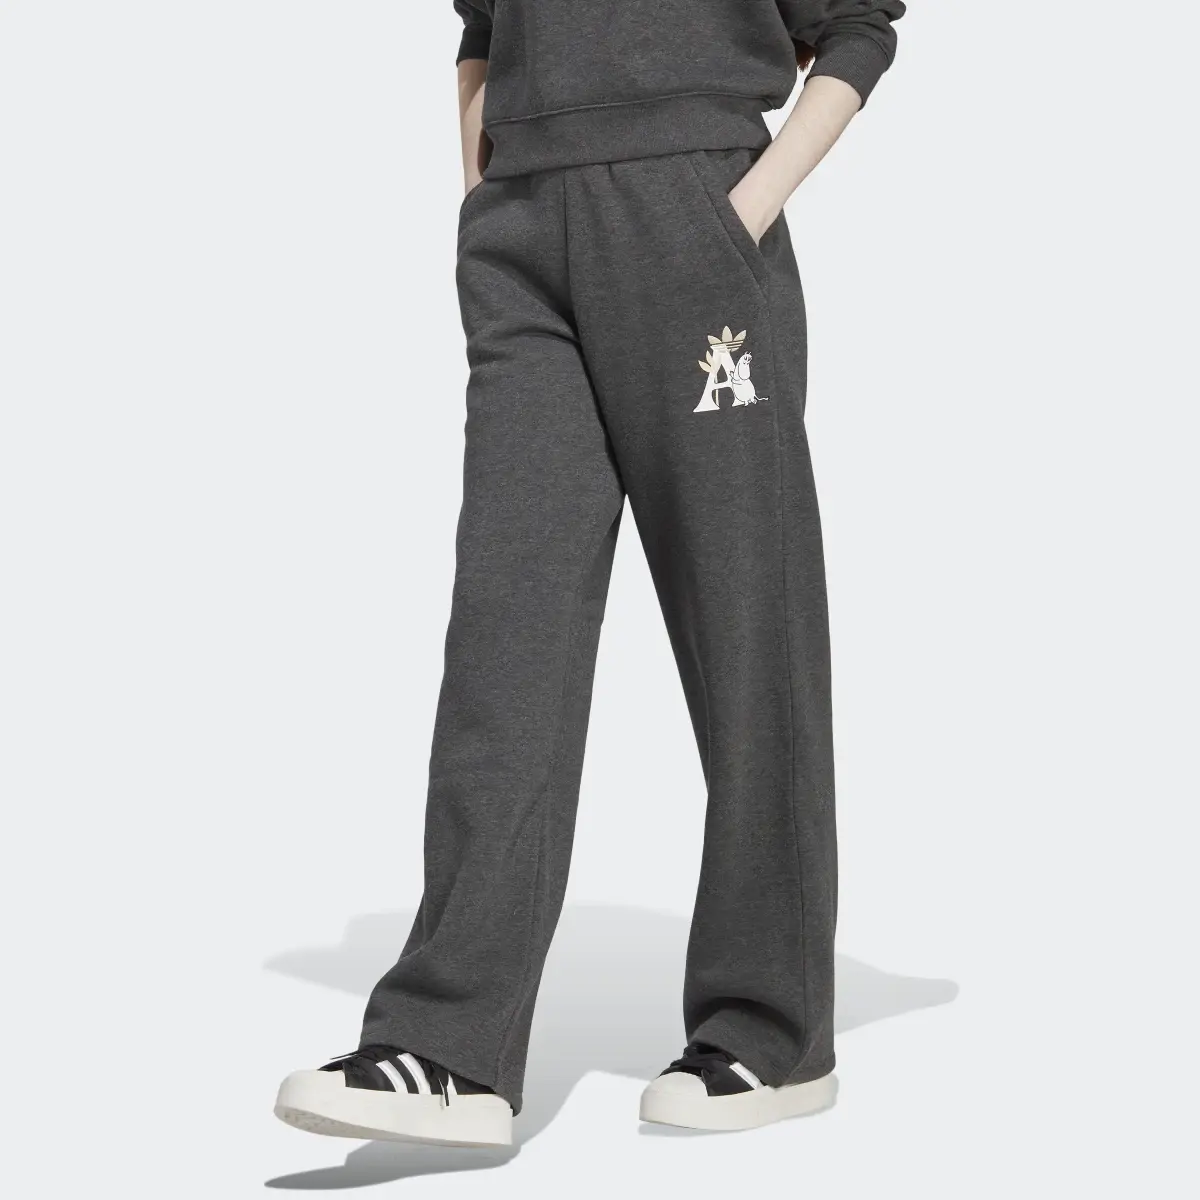 Adidas Originals x Moomin Wide Leg Sweat Pants. 1